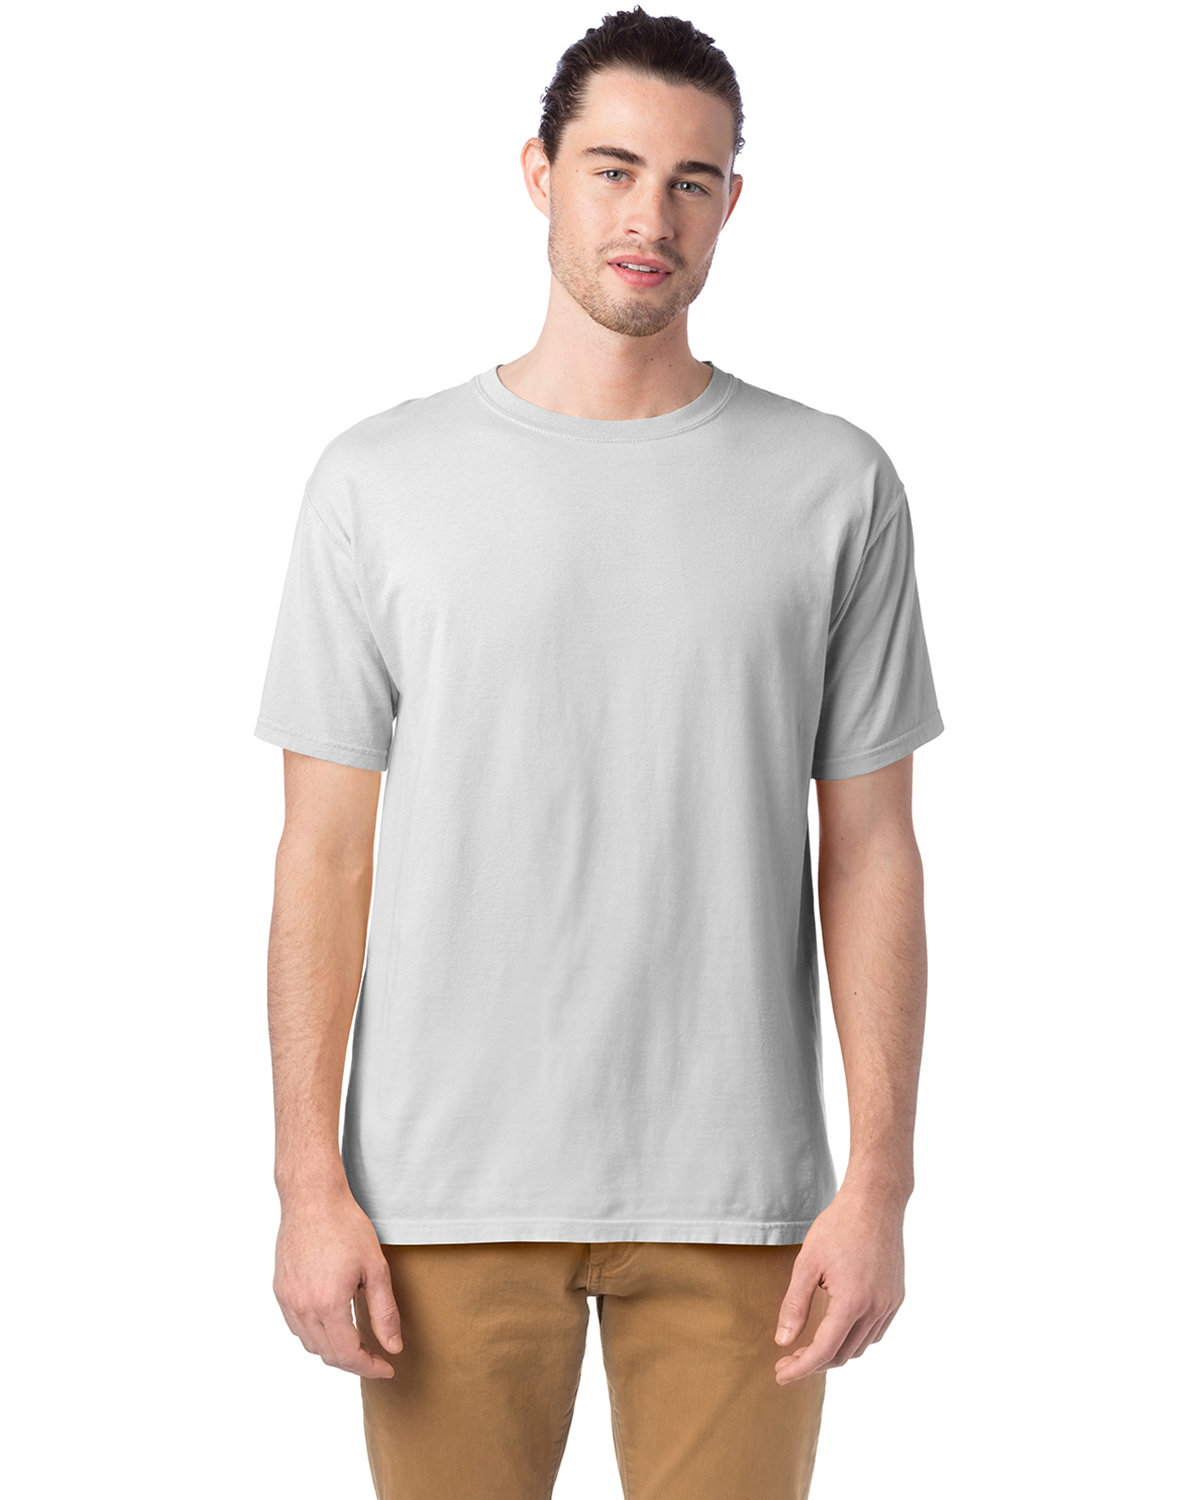 ComfortWash by Hanes Men's Garment-Dyed T-Shirt WHITE 